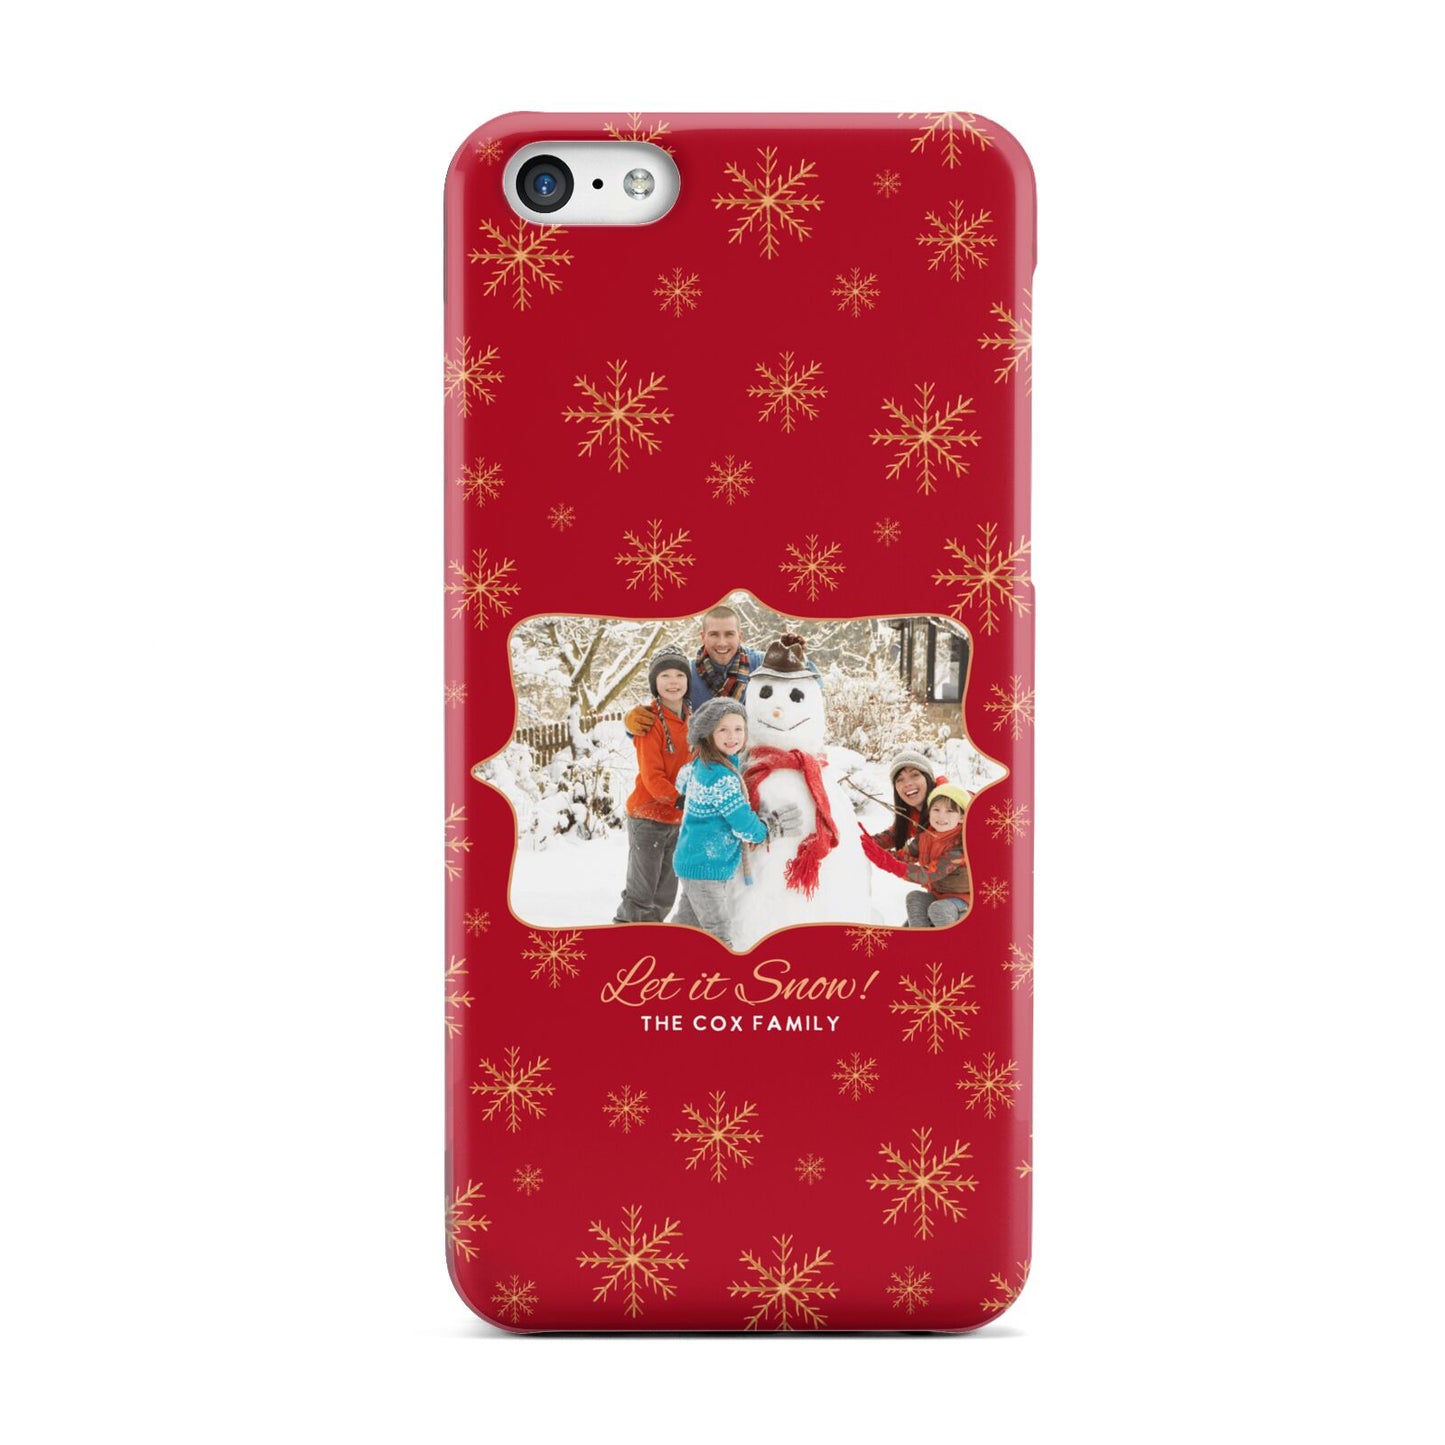 Let it Snow Christmas Photo Upload Apple iPhone 5c Case